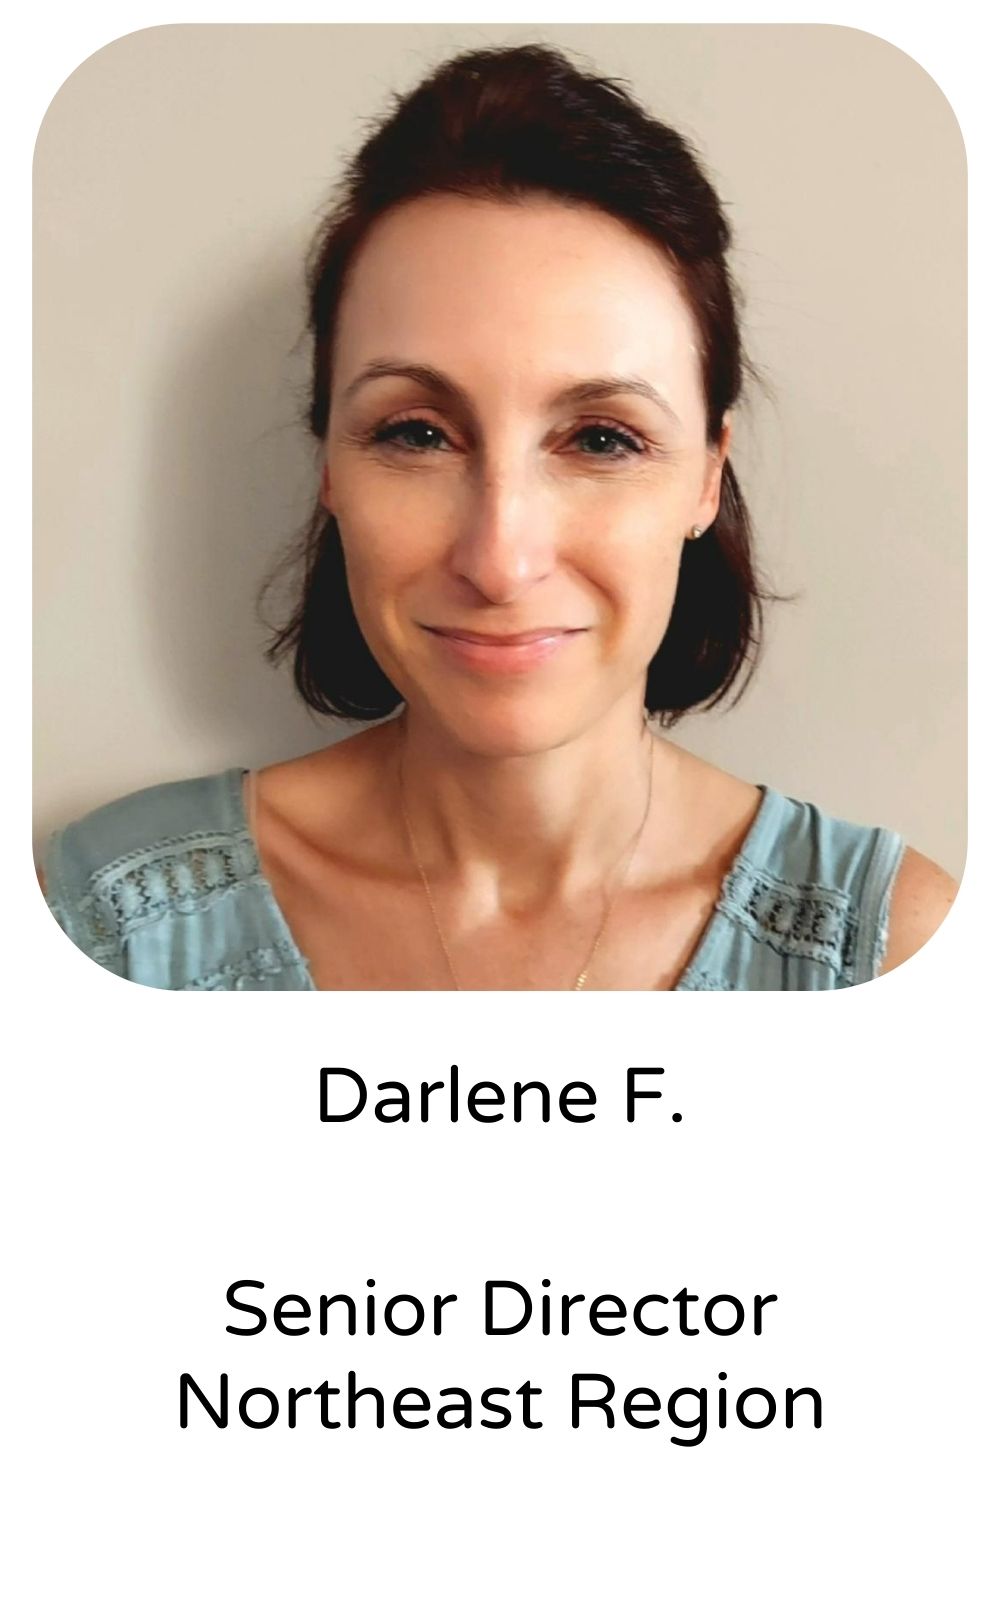 Darlene F, Senior Director, Northeast Region